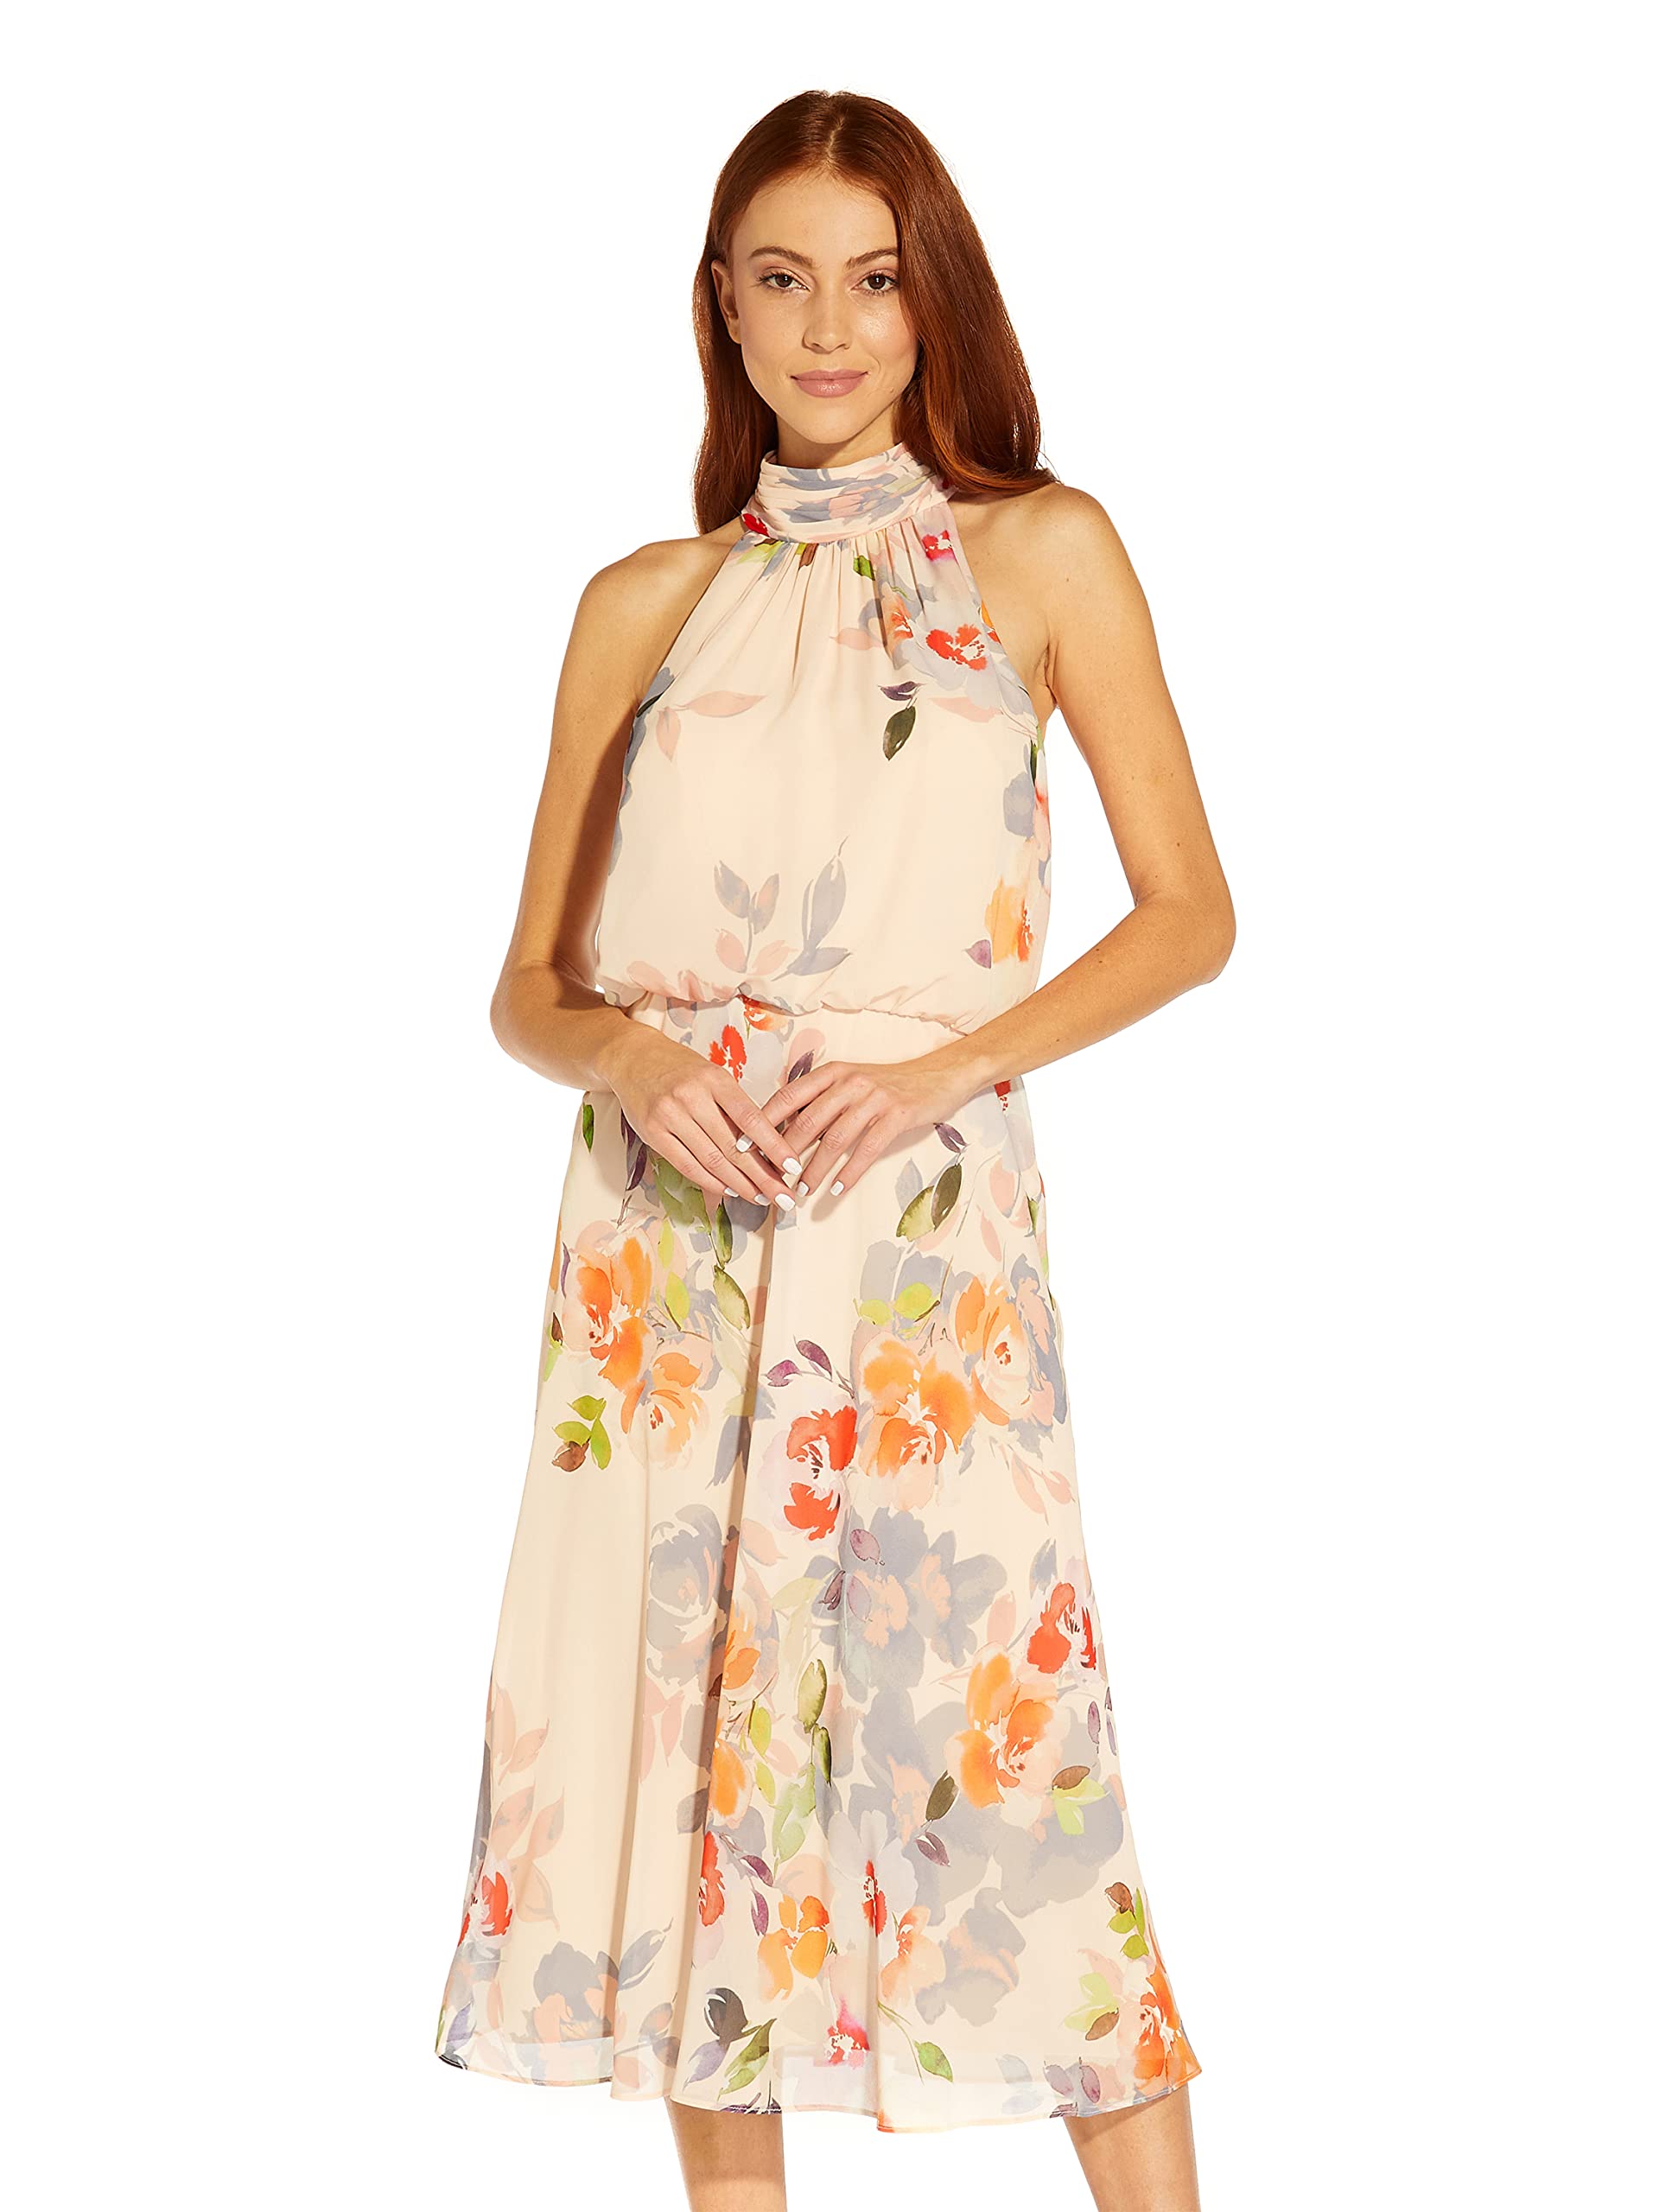 Adrianna Papell Women's Floral Halter Chiffon Dress